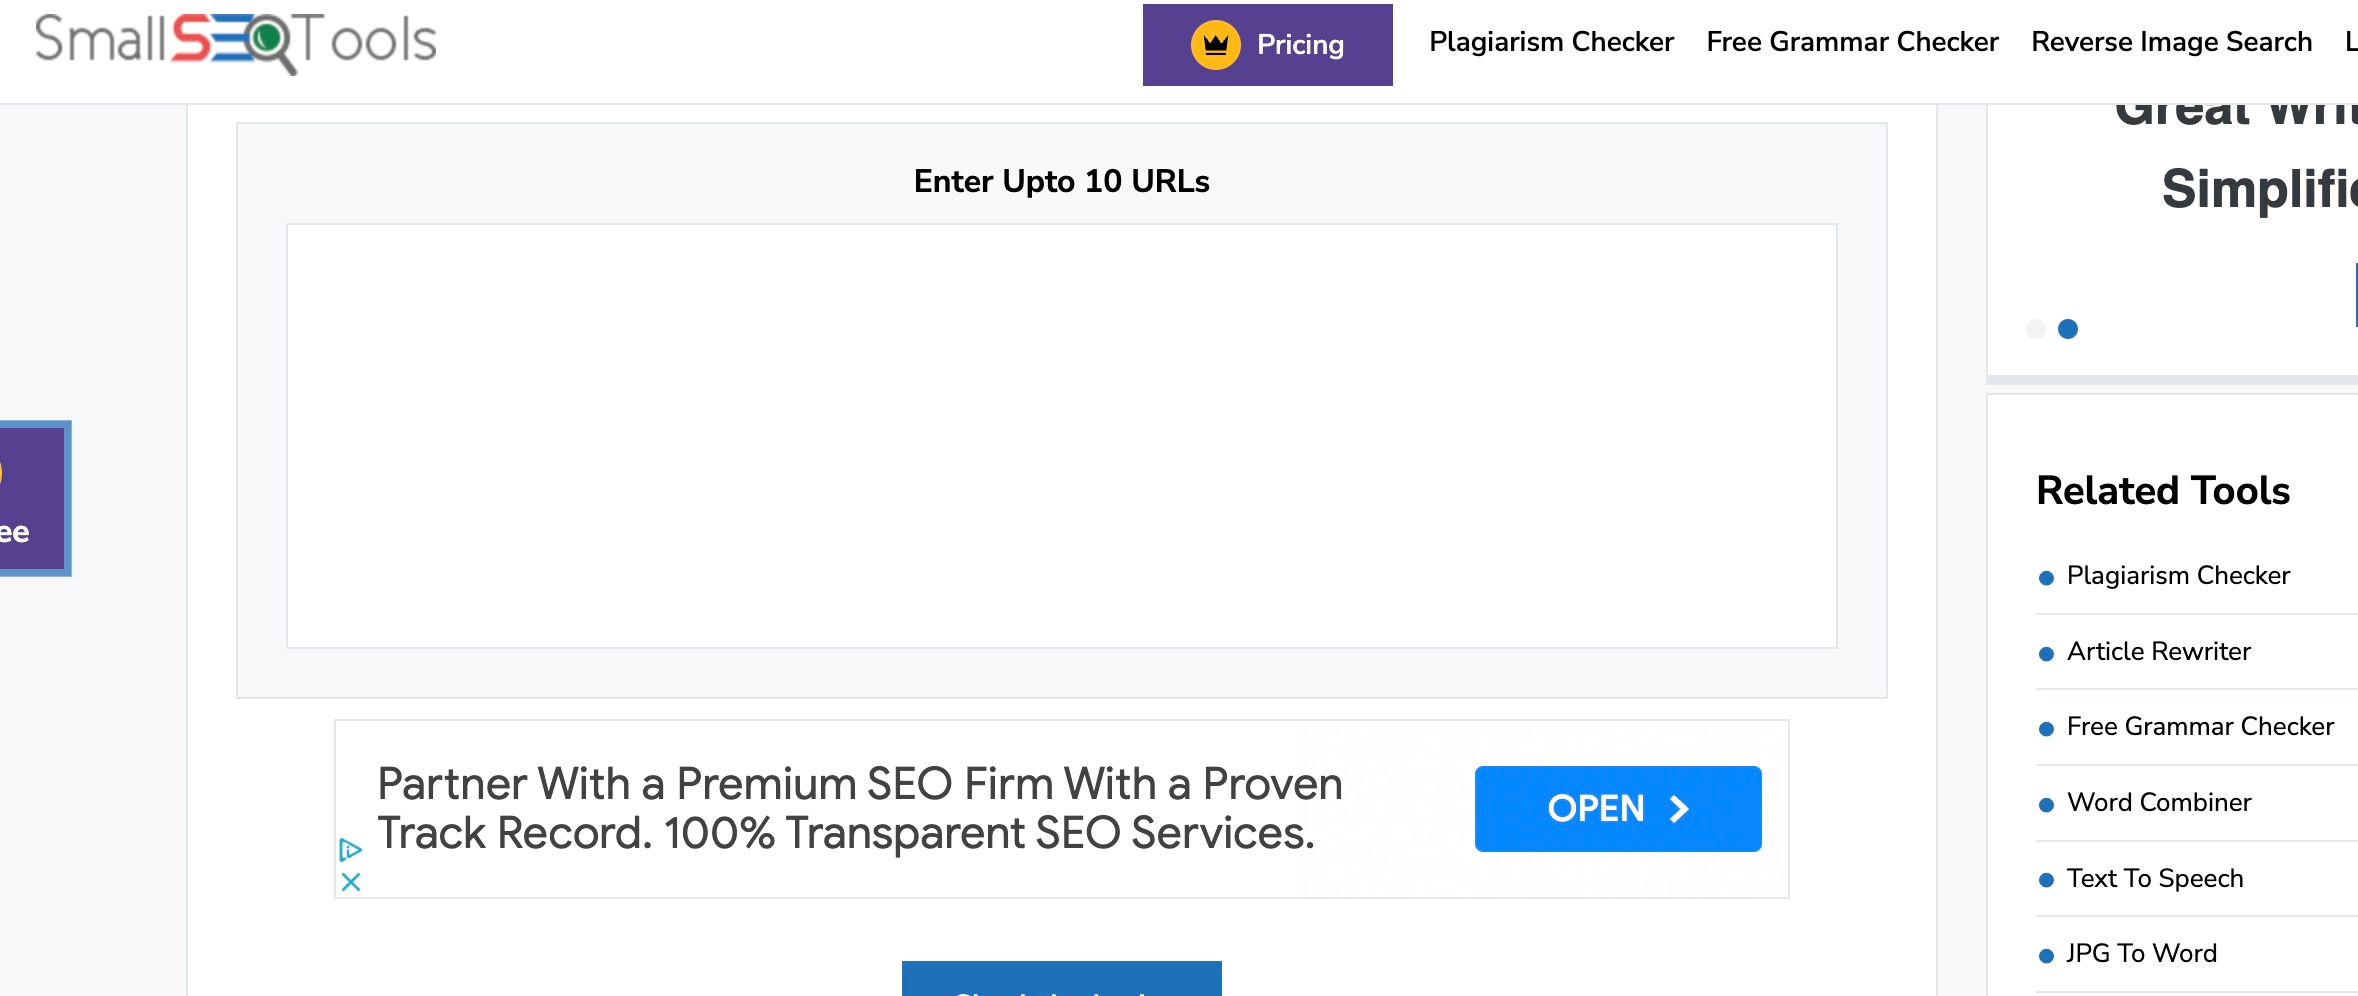 small seo tools domain authority checker / page authority checker